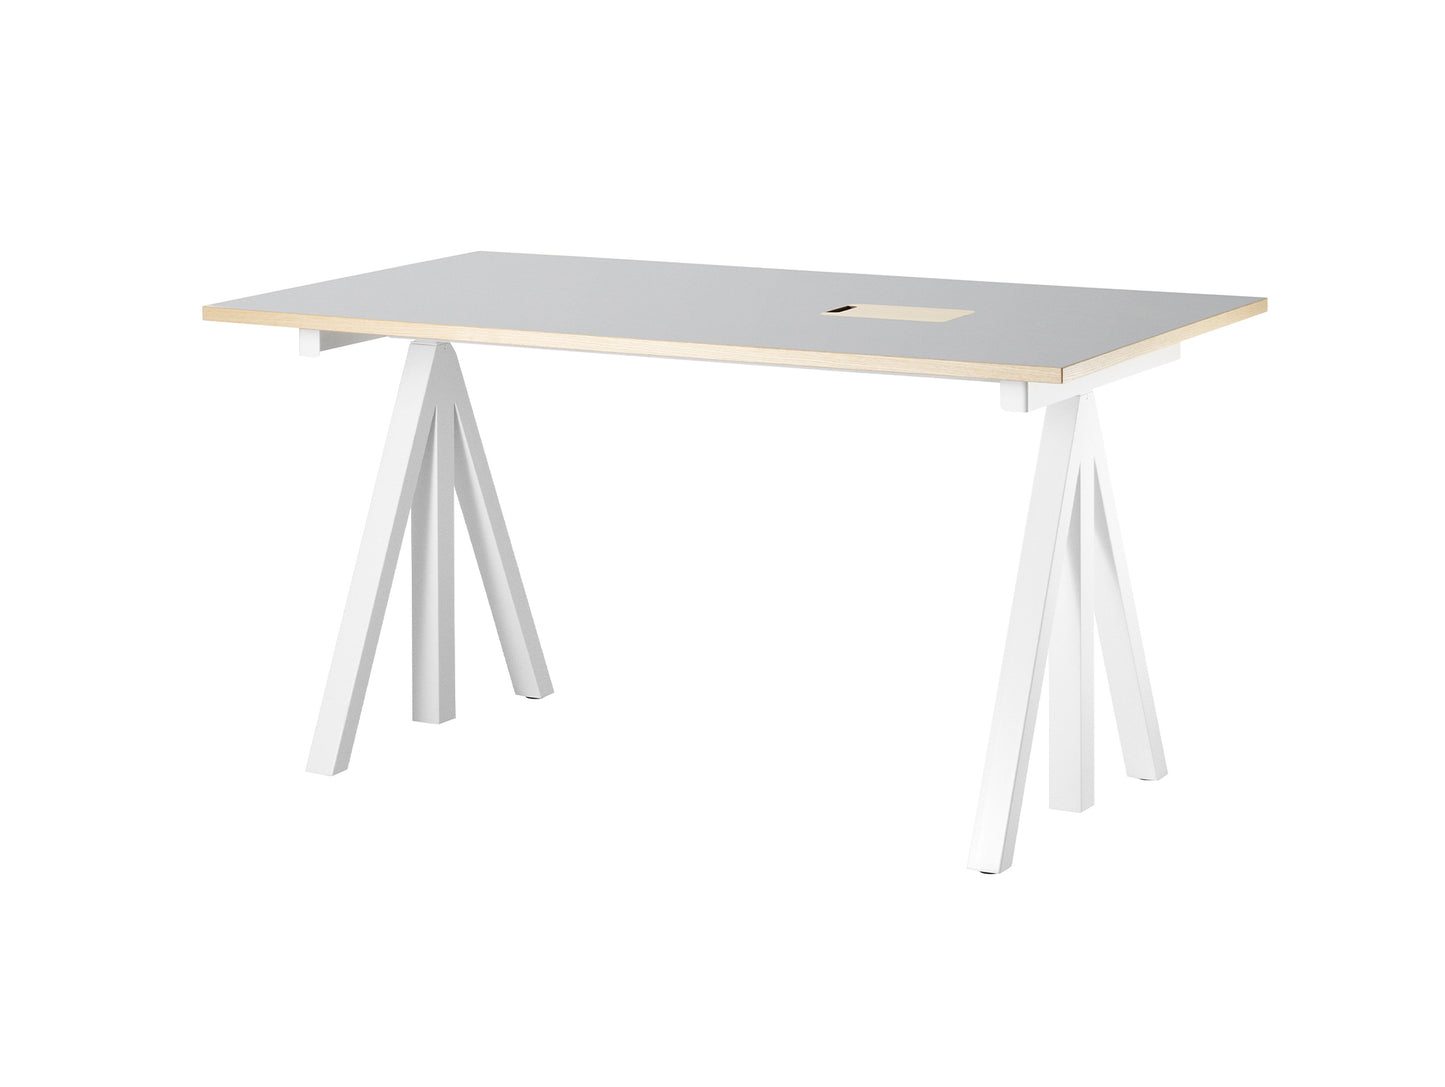 String Work Desk by String - 140 x 78 / White Frame /Light Grey Linoleum MDF Desktop